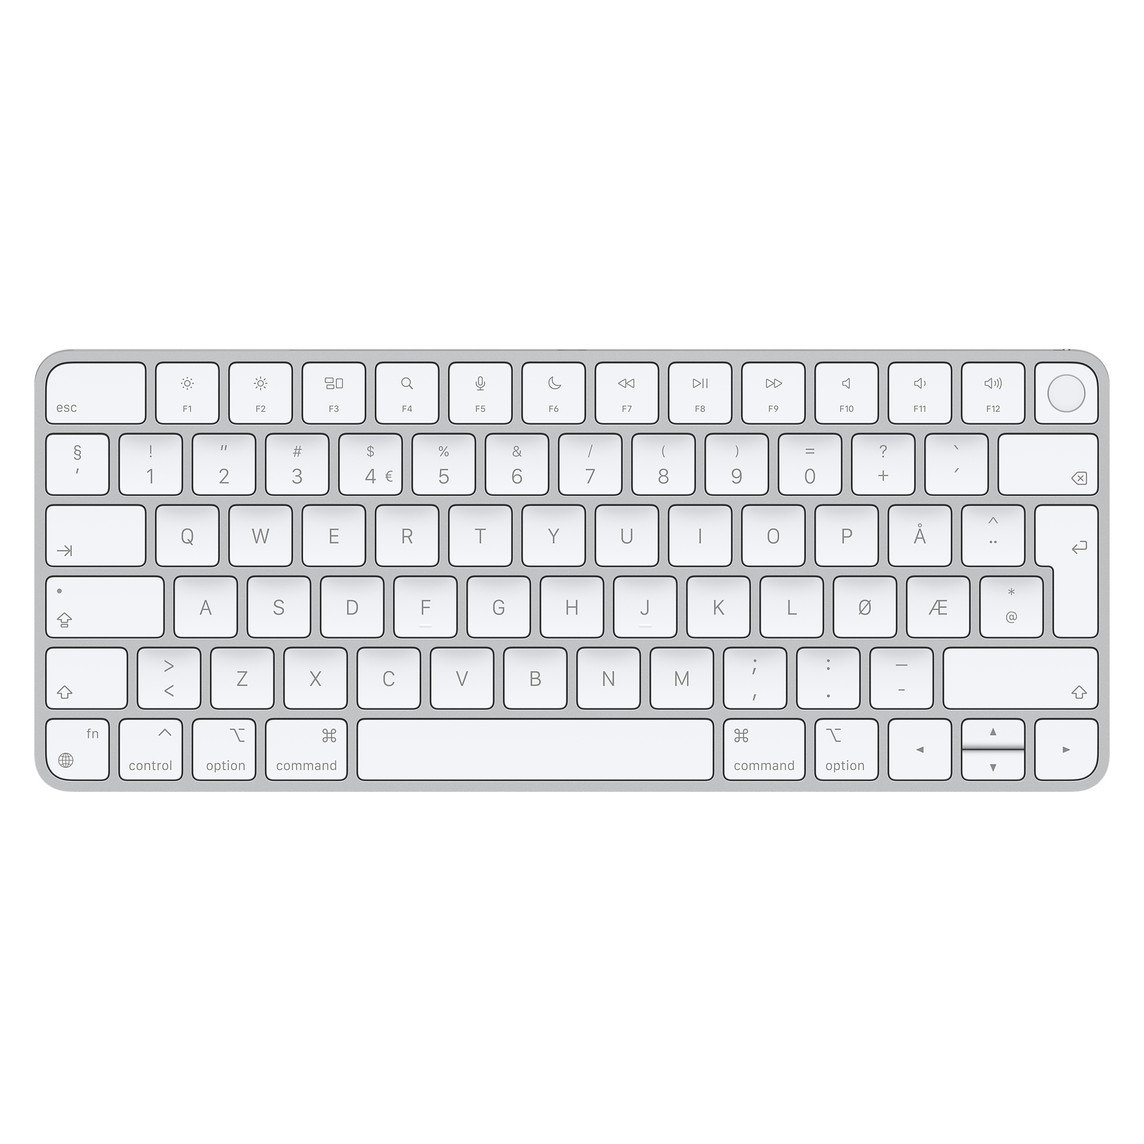 Med trådløst og oppladbart Magic Keyboard med Touch ID skriver du alltid komfortabelt og presist.